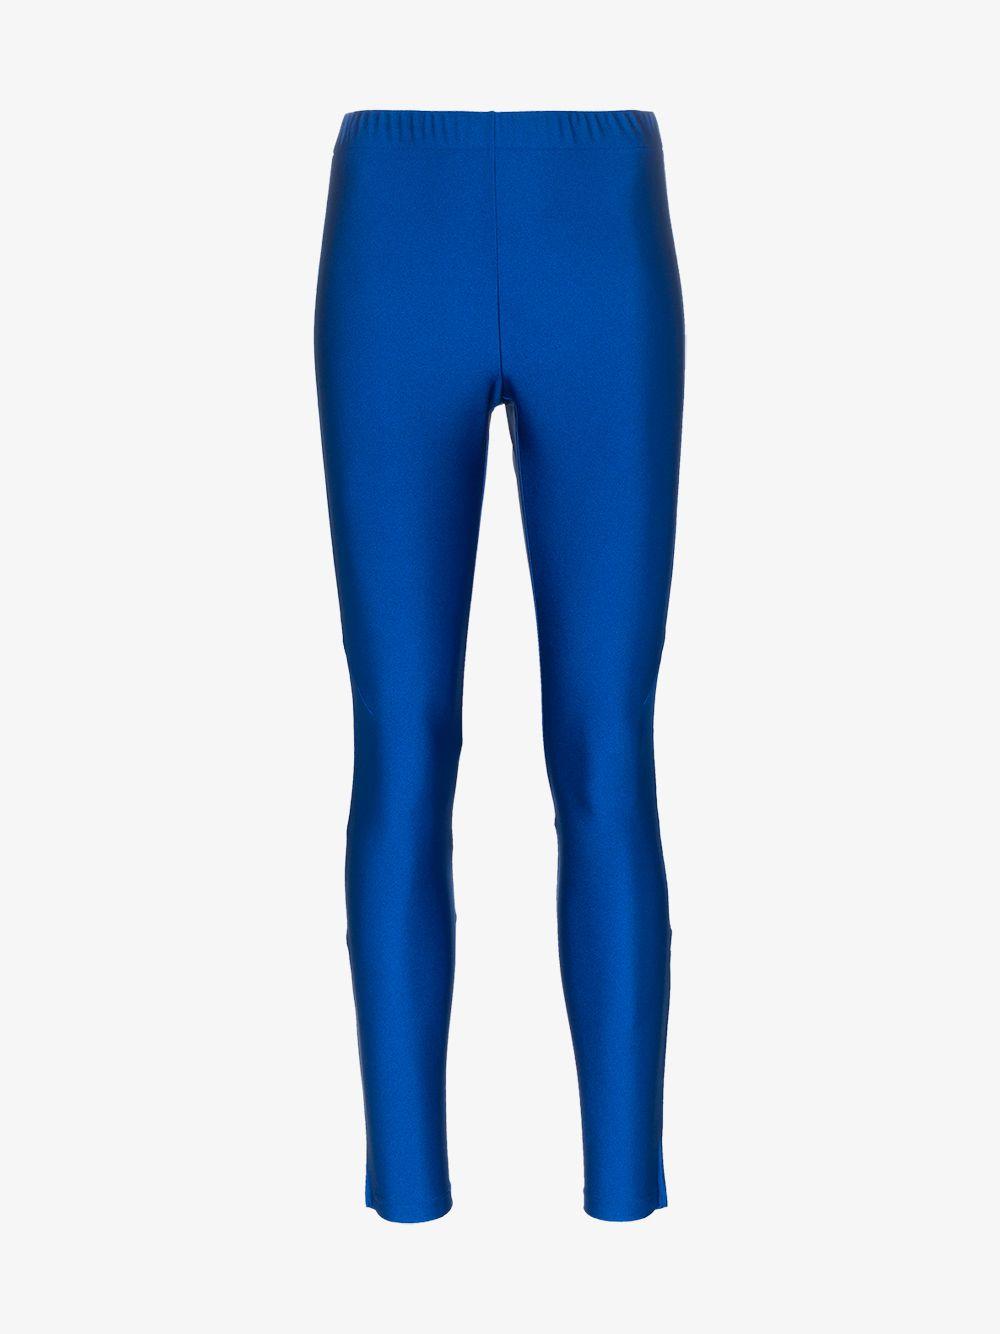 blue gucci leggings